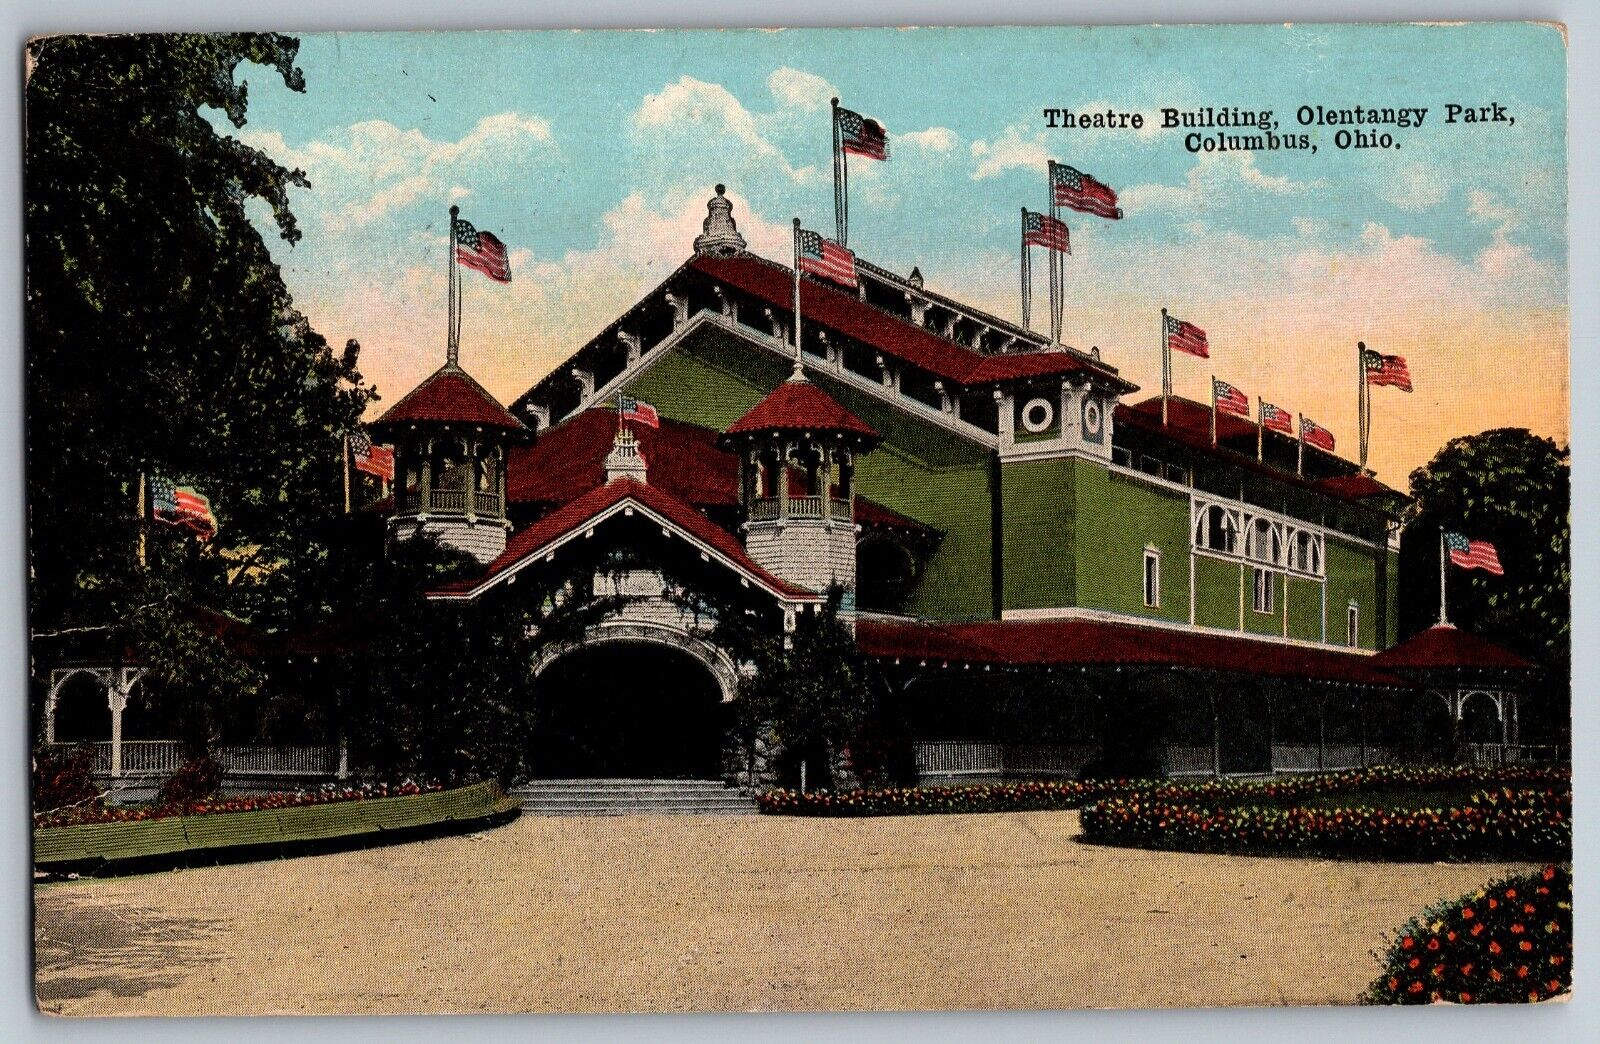 Columbus, Ohio - Beautiful Theatre Bldg. - Olentangy Park - Vintage Postcard